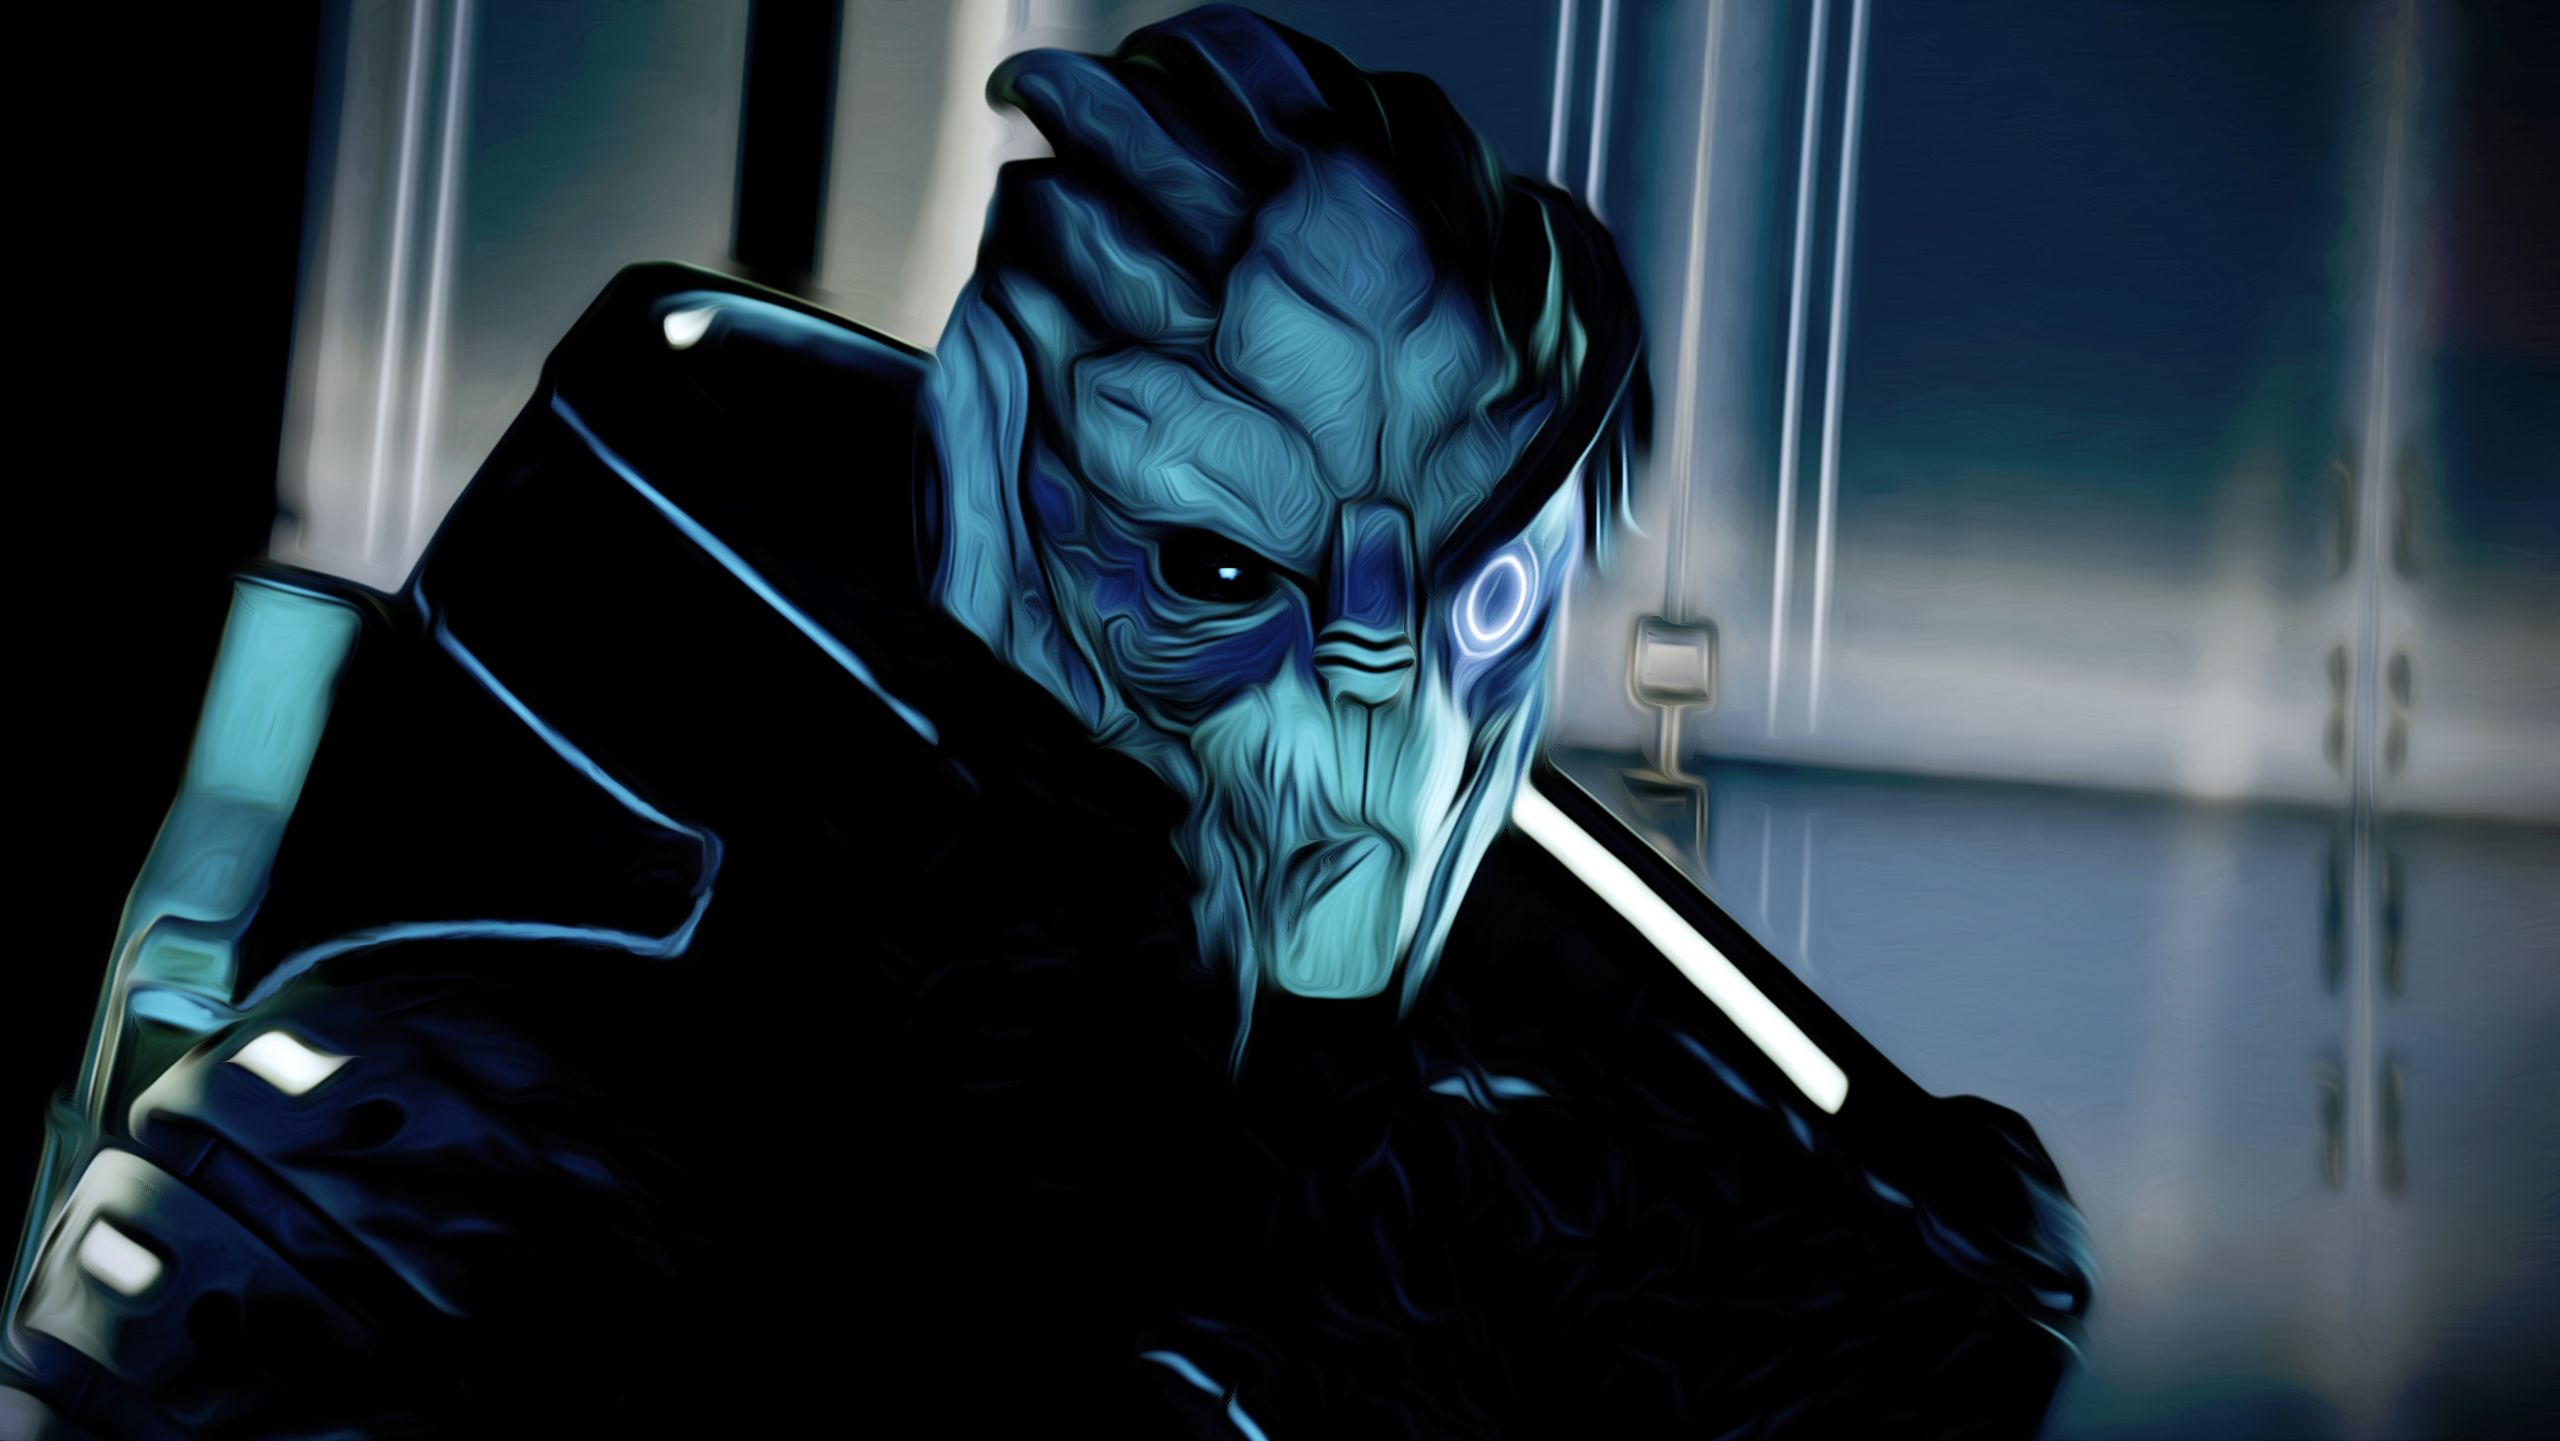 Descarga gratis la imagen Mass Effect, Videojuego, Mass Effect 2, Garrus Vakarian en el escritorio de tu PC